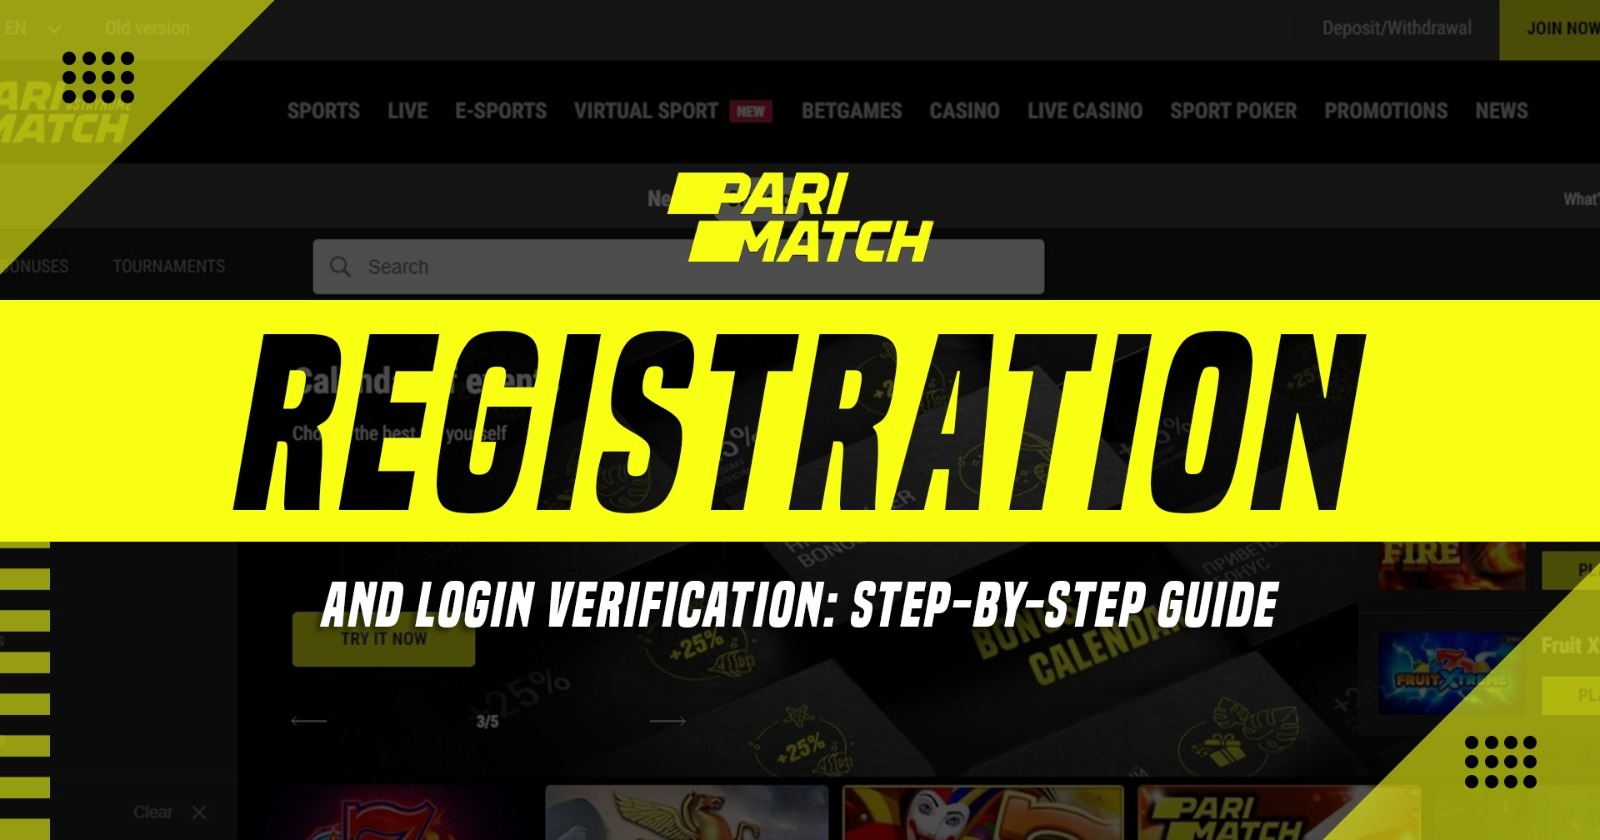 Parimatch Registration & Login Verification: Step-by-Step Guide